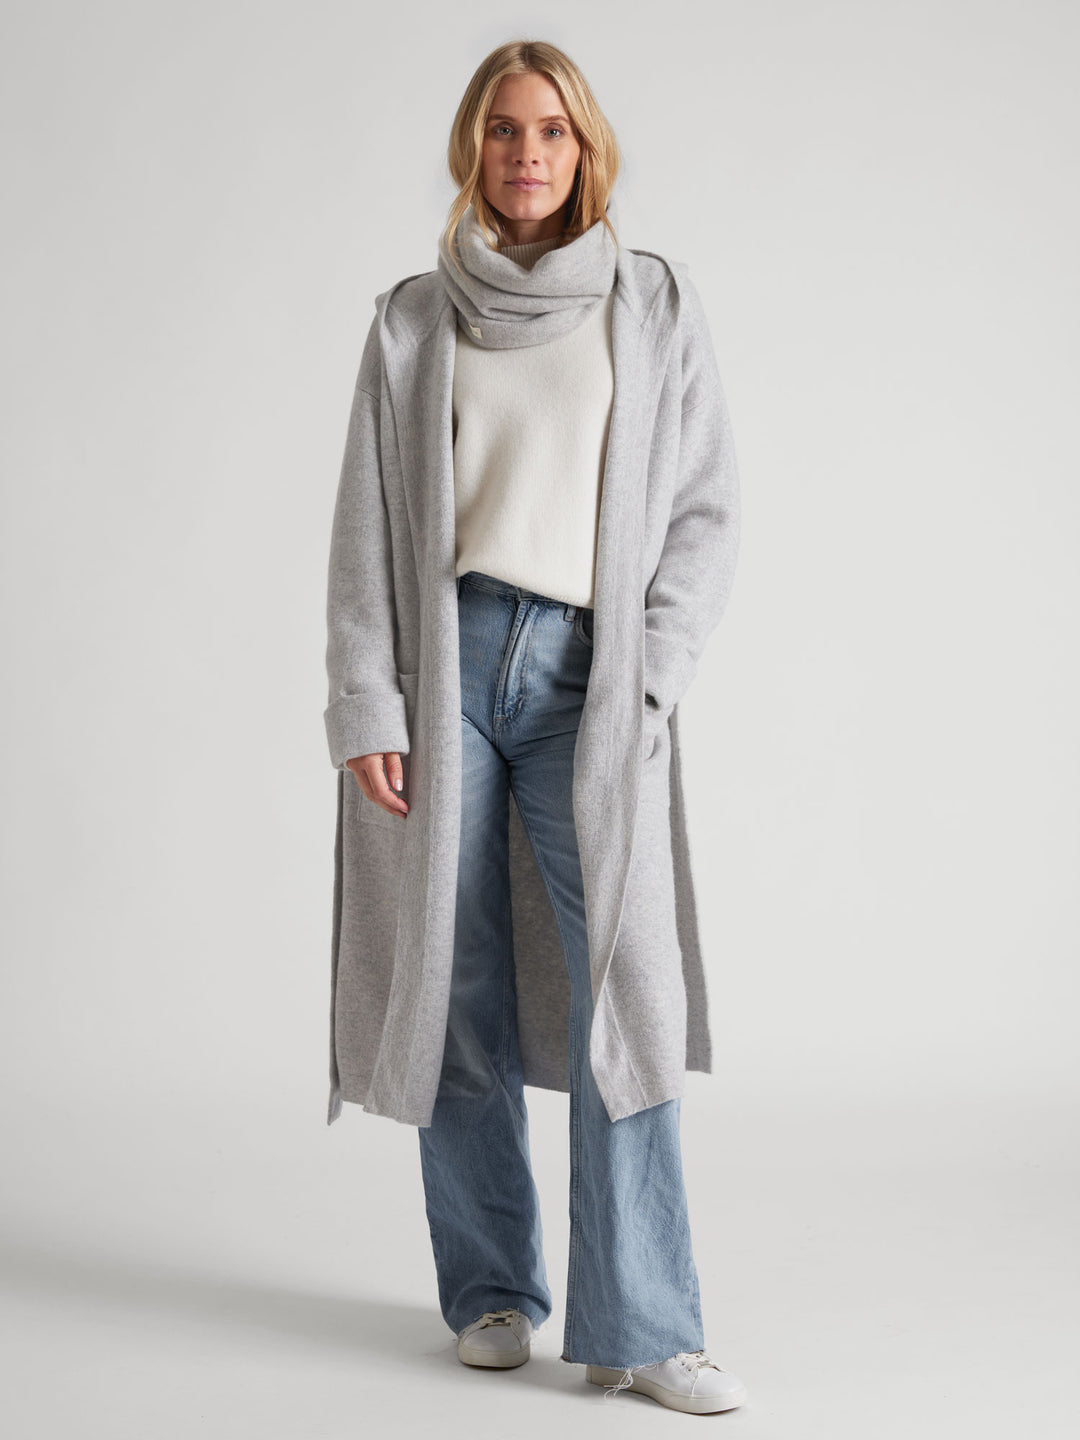 Cashmere snood / scarf "Eydis" in 100% pure cashmere. Scandinavian design by Kashmina. Color: Light grey.